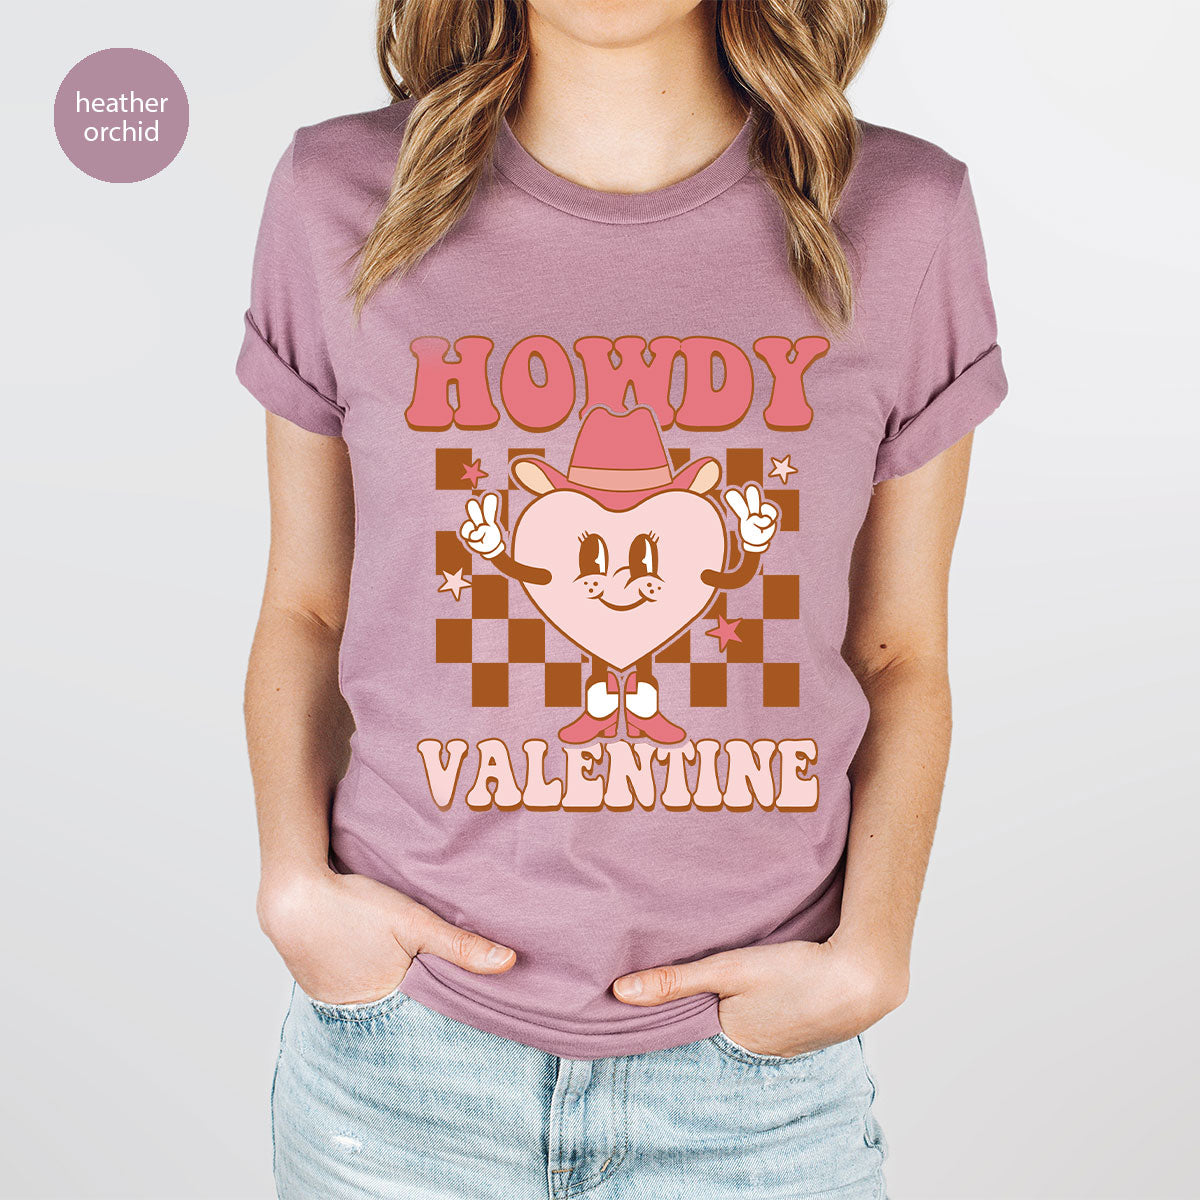 Howdy Valentine Shirt, 2023 Valentine's Day Shirt, Cute Feb 14 Tee